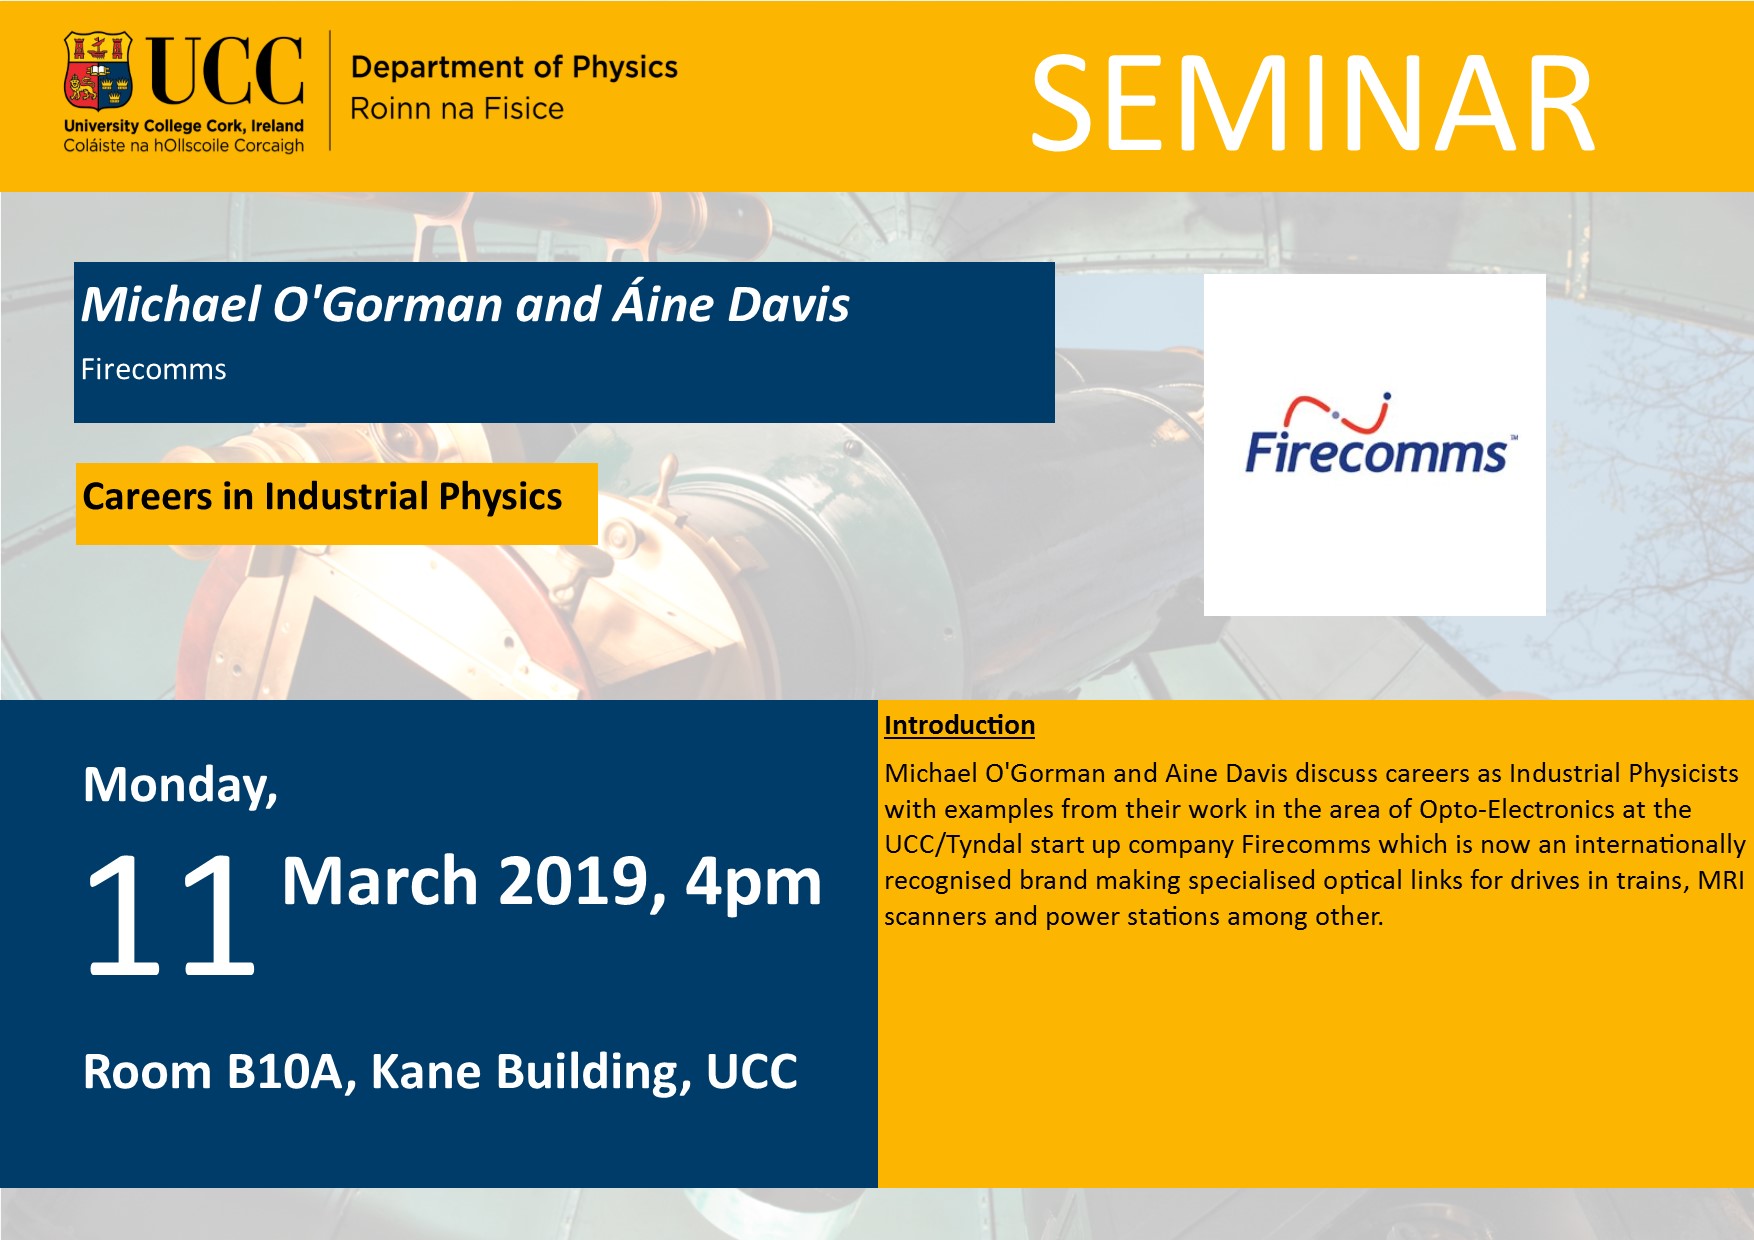 11 Mar 2019 Firecomms Seminar Poster